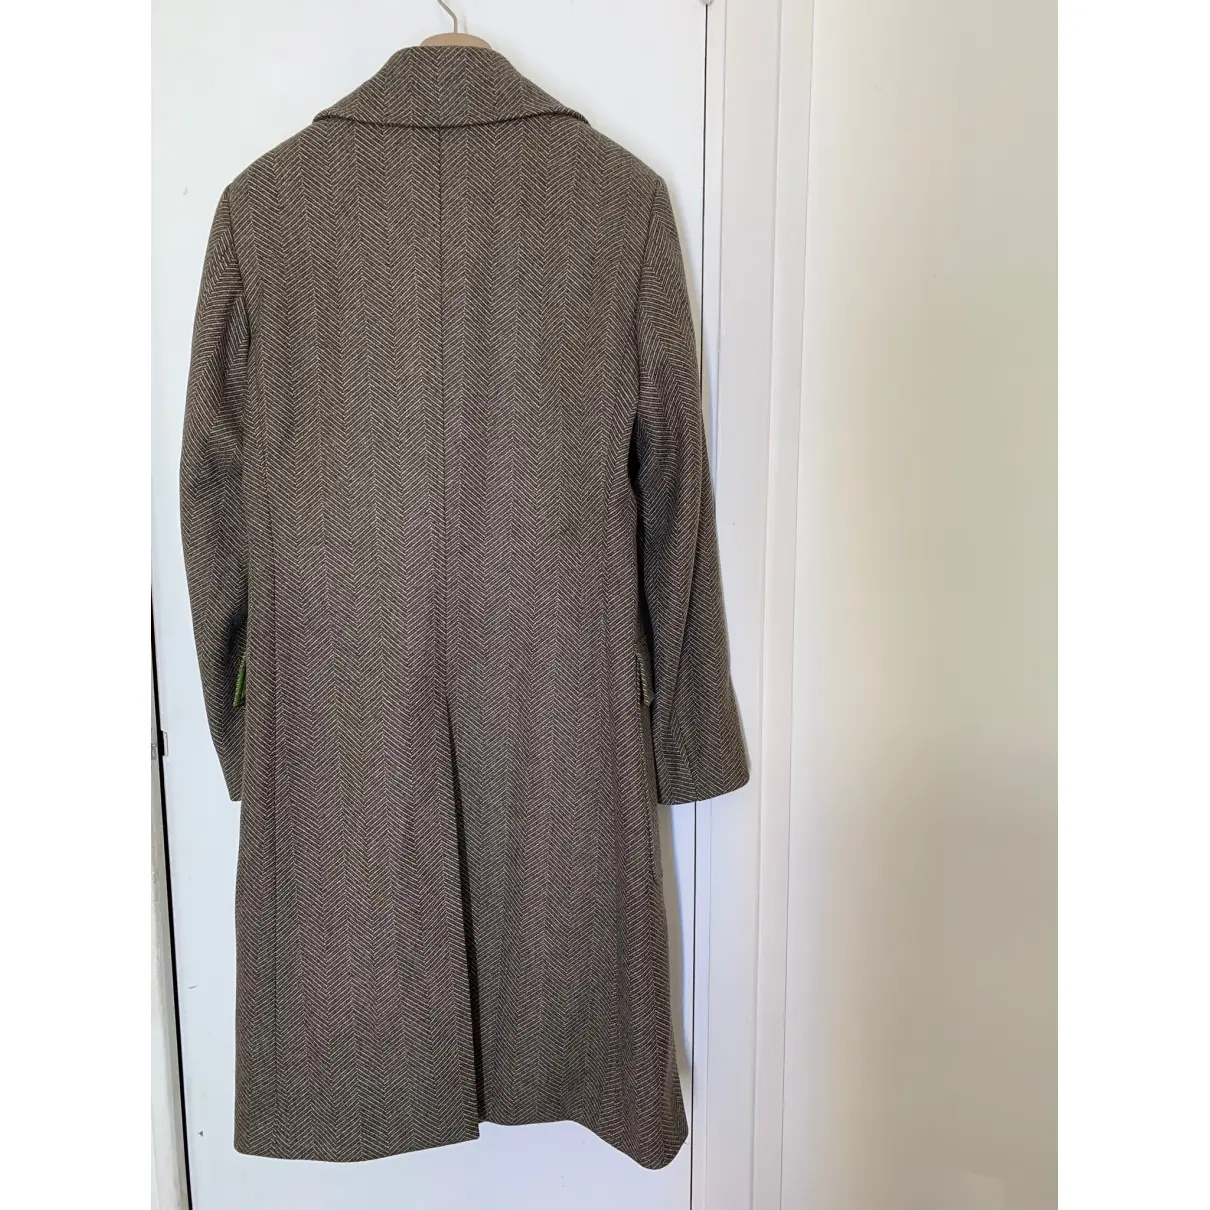 Valentino Garavani Wool coat for sale - Vintage